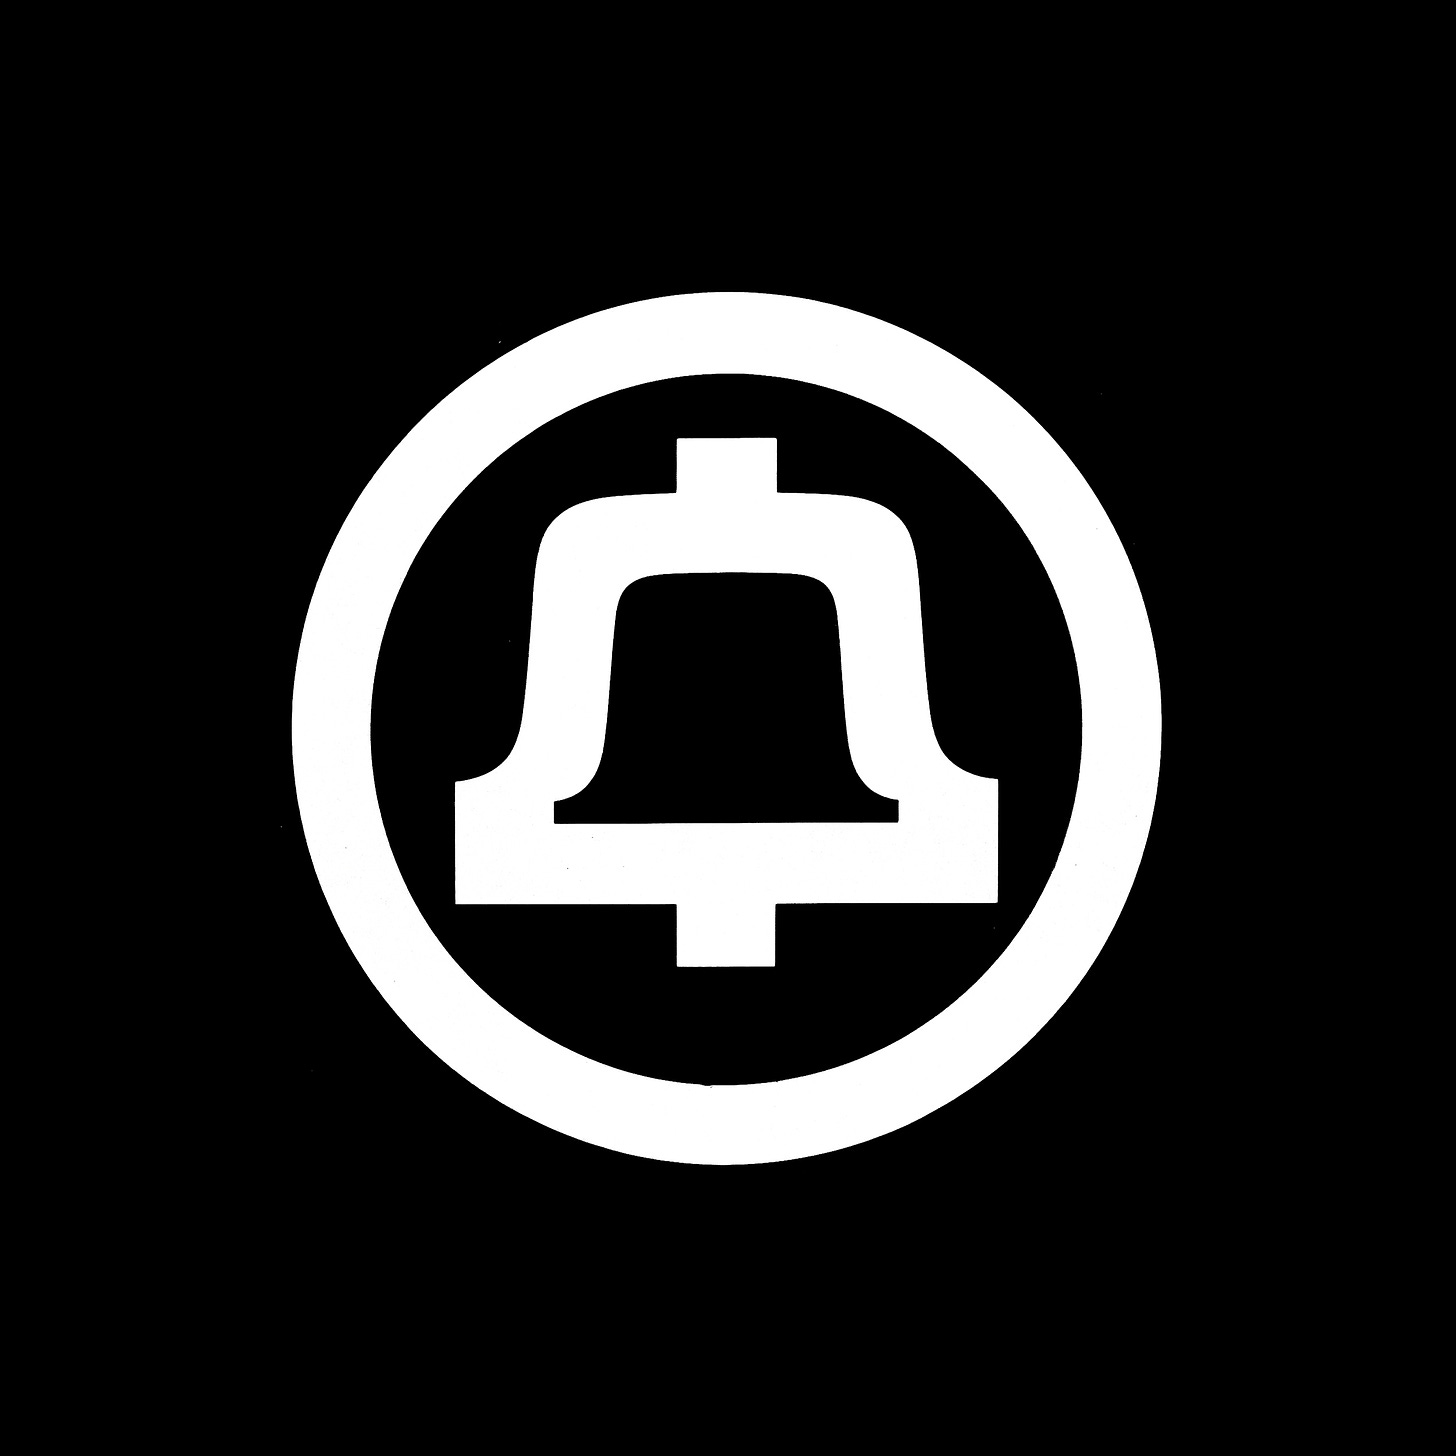 Saul Bass & Associates logo for AT&T